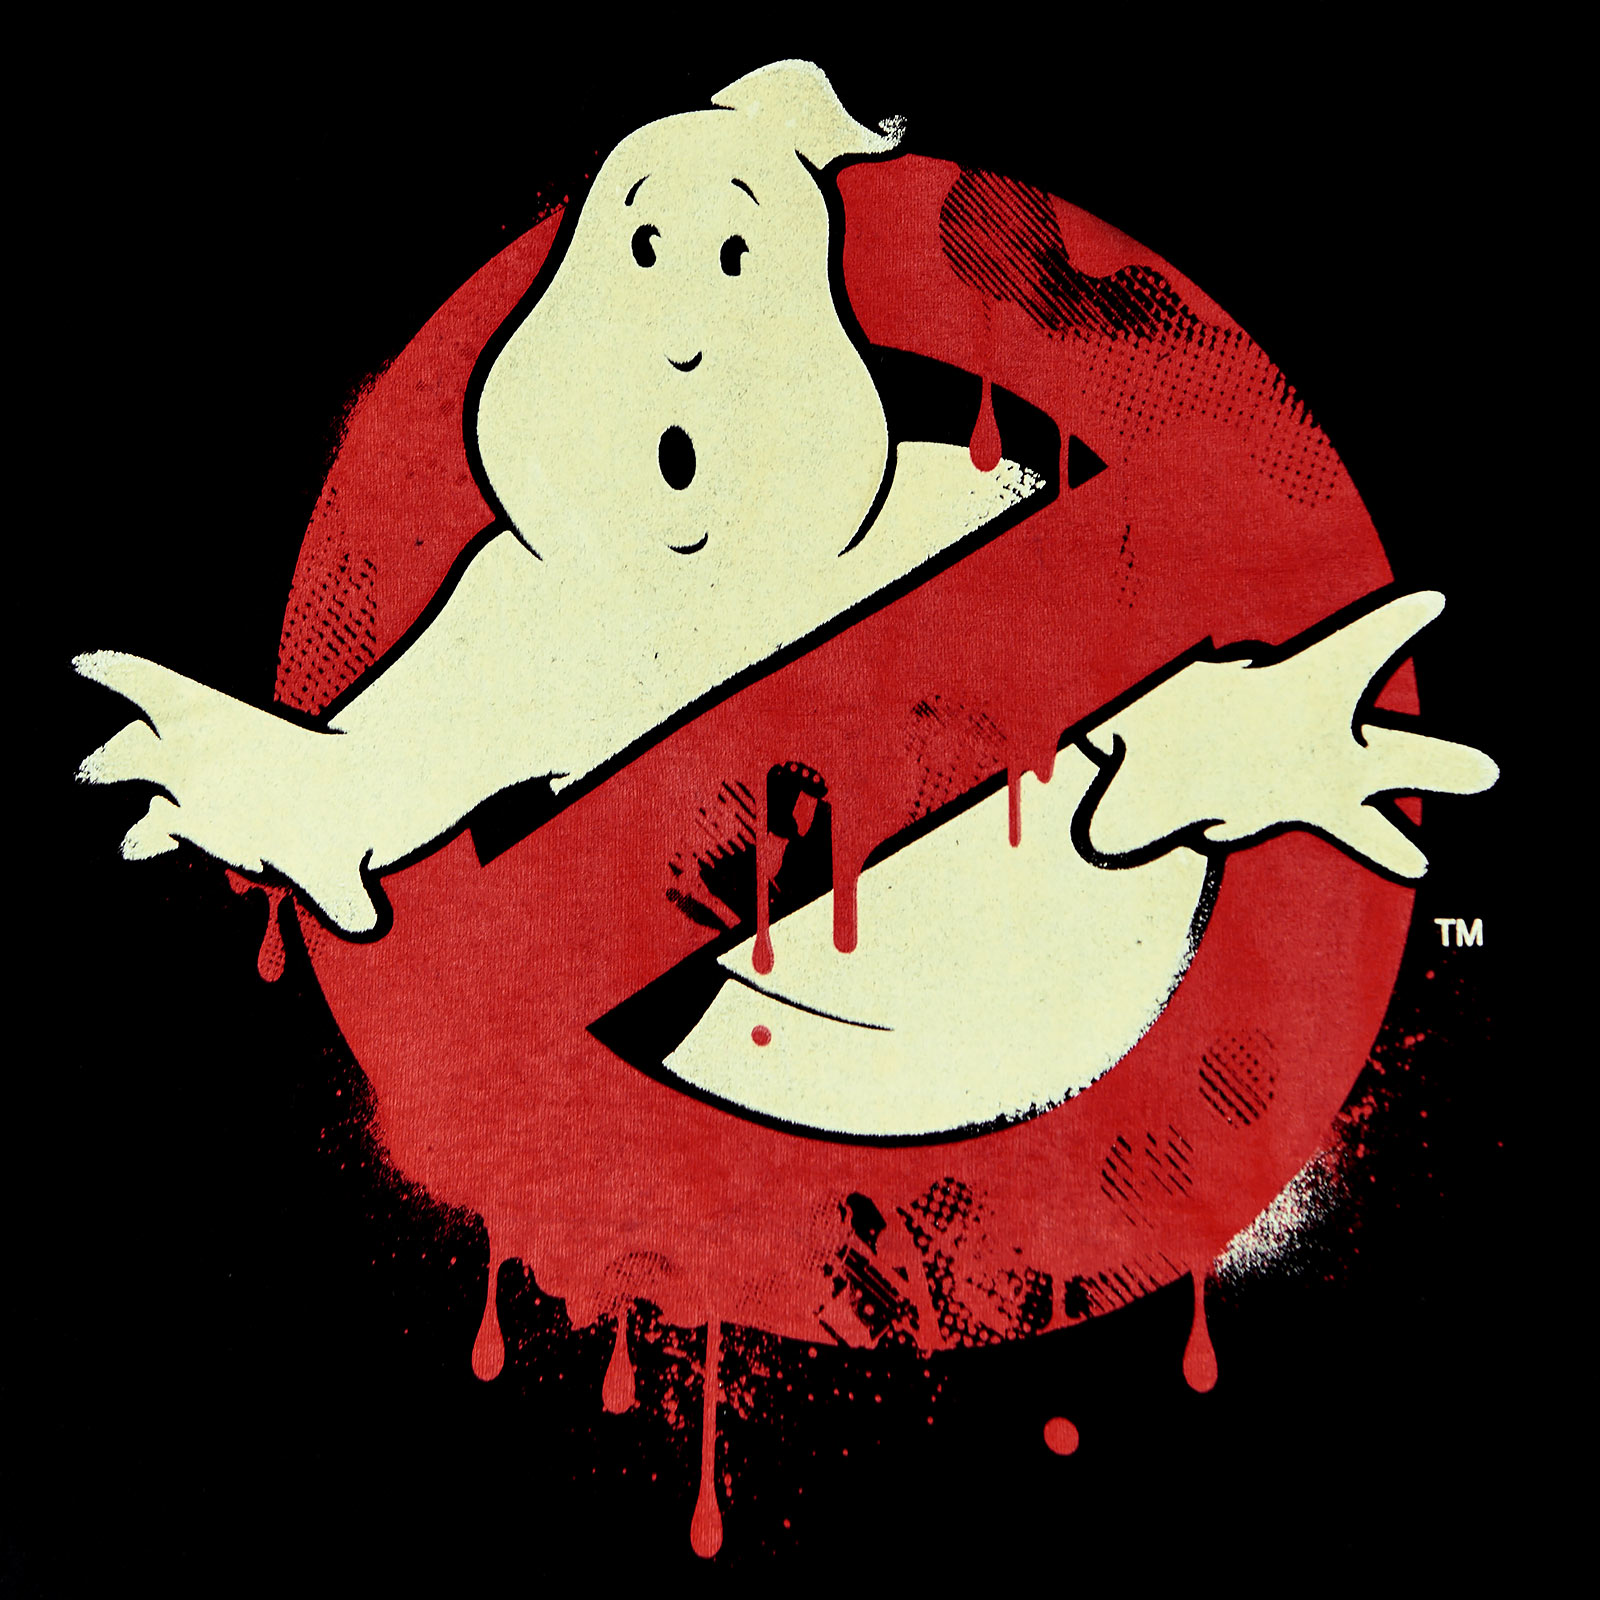 Ghostbusters - Glow in the Dark Logo T-Shirt